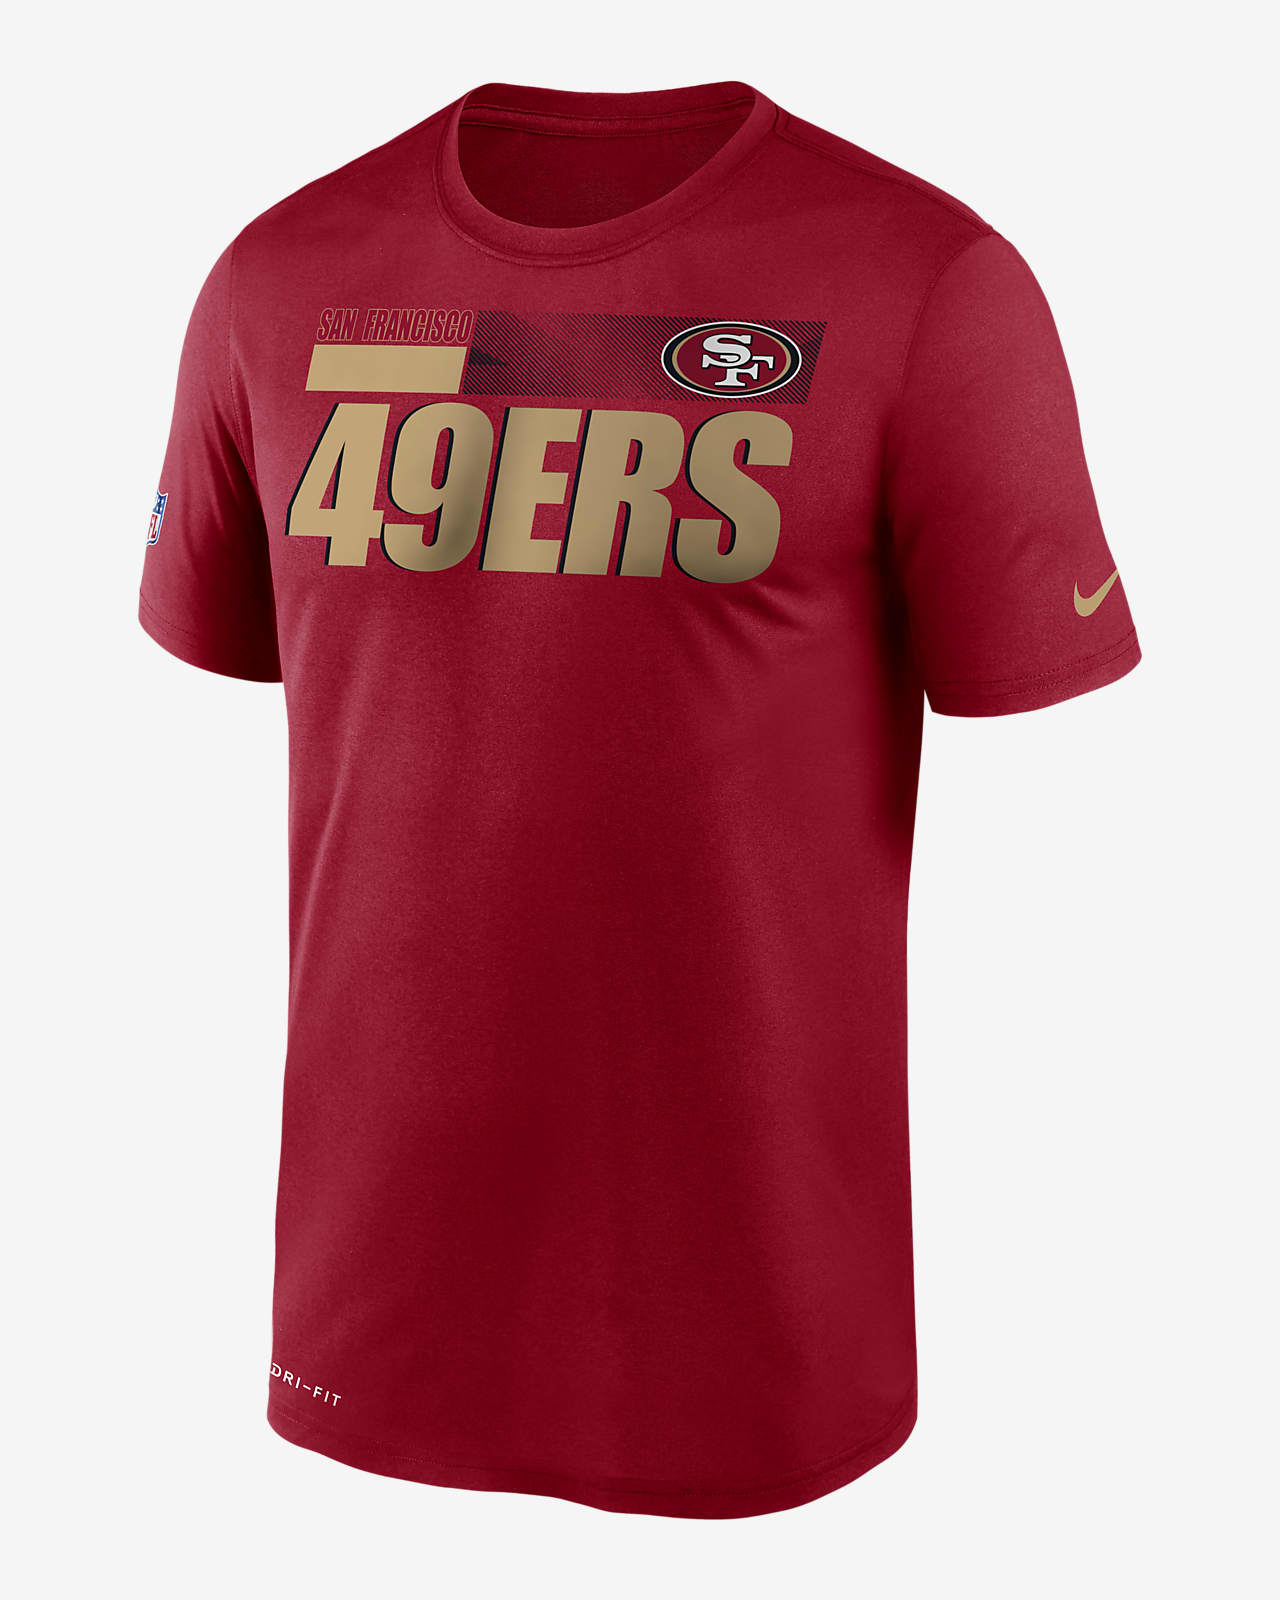 nike dri fit 49ers shirt